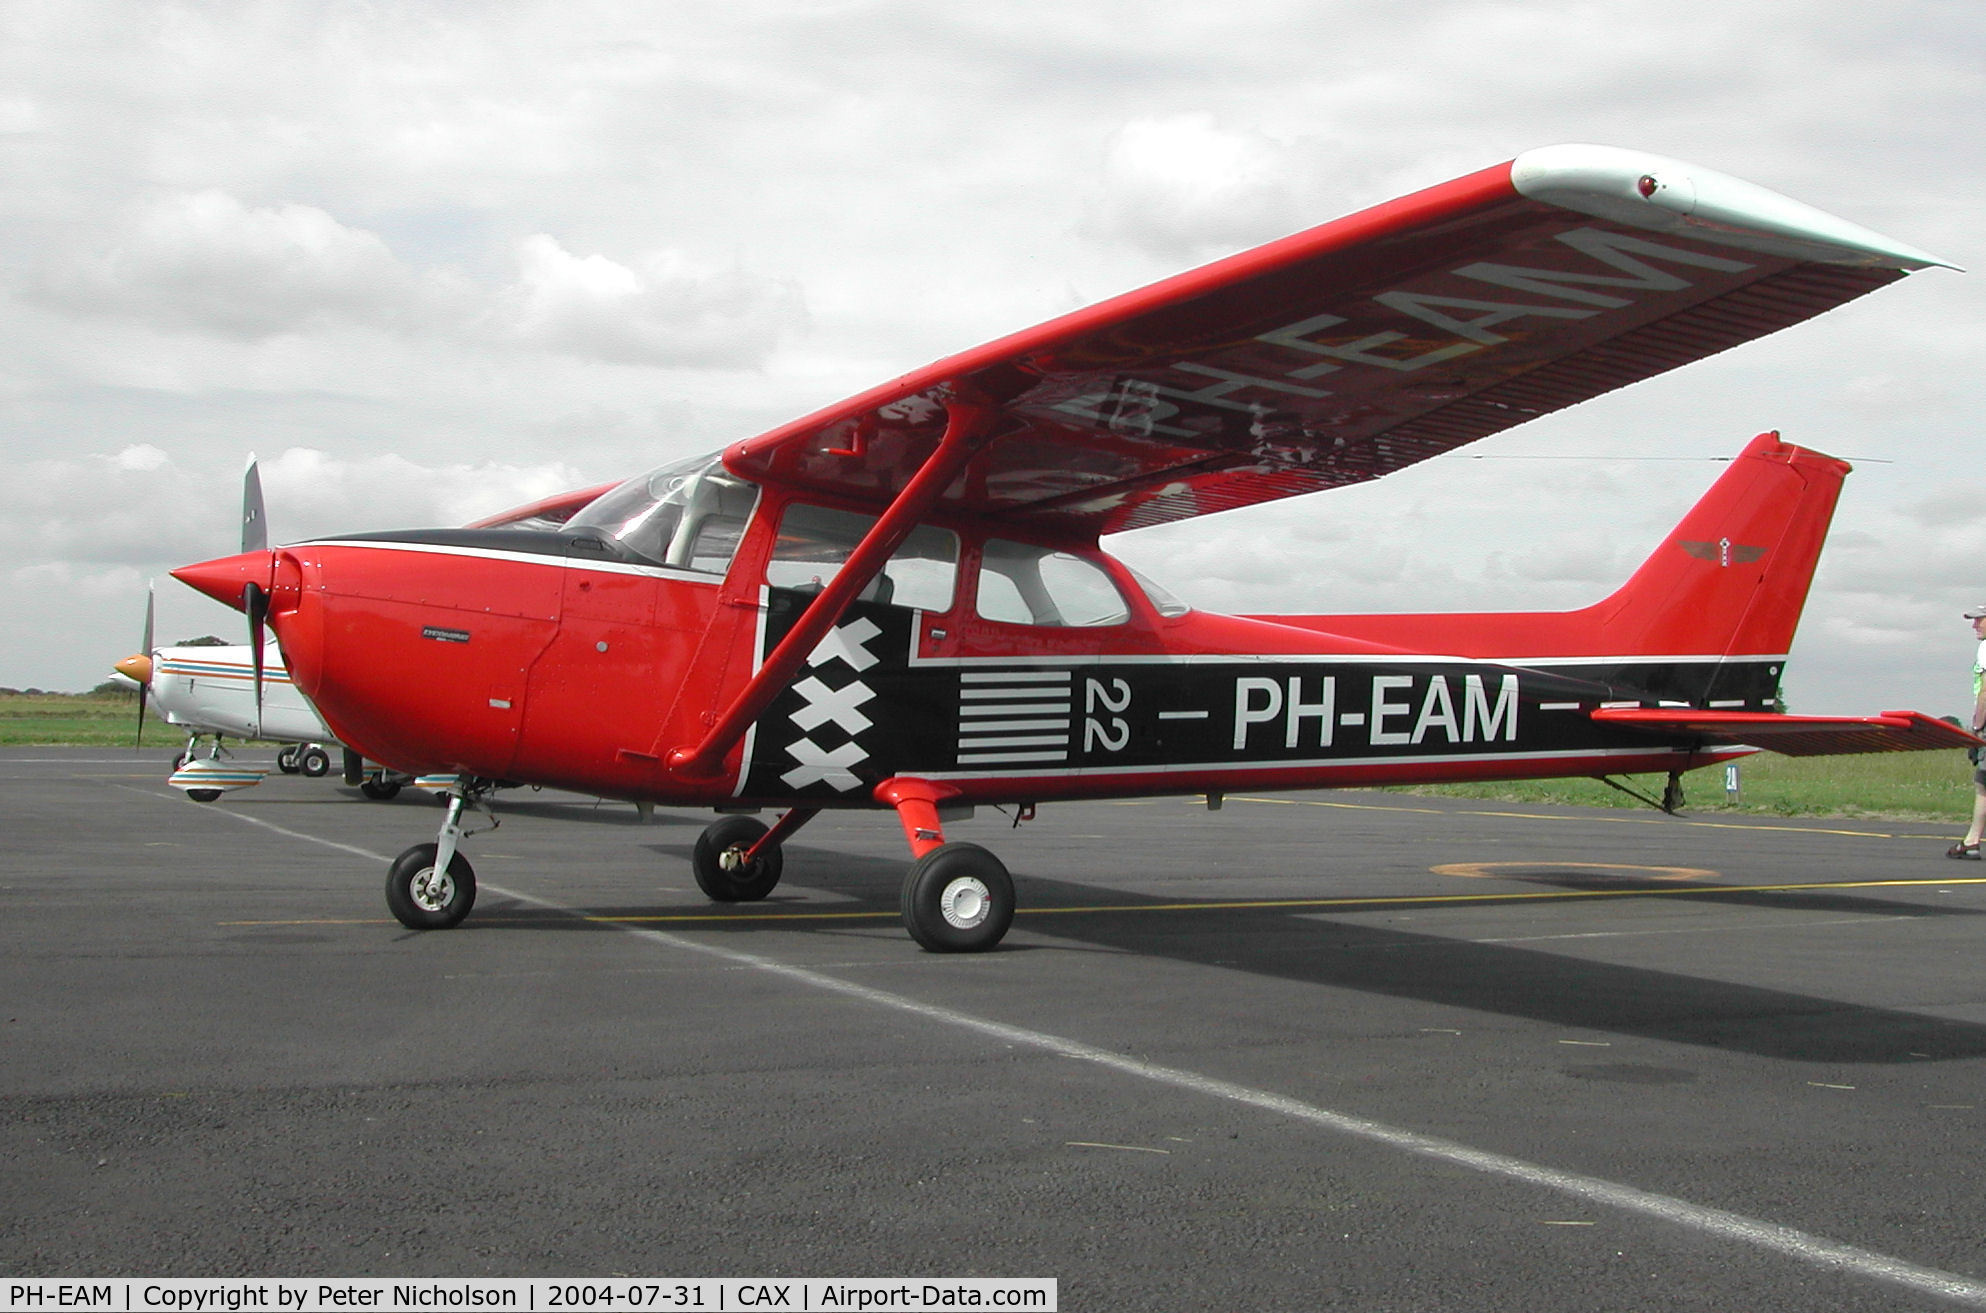 PH-EAM, 1977 Reims F172N Skyhawk C/N 1602, This Reims F172N Skyhawk attended the 2004 Carlisle Fly-in.